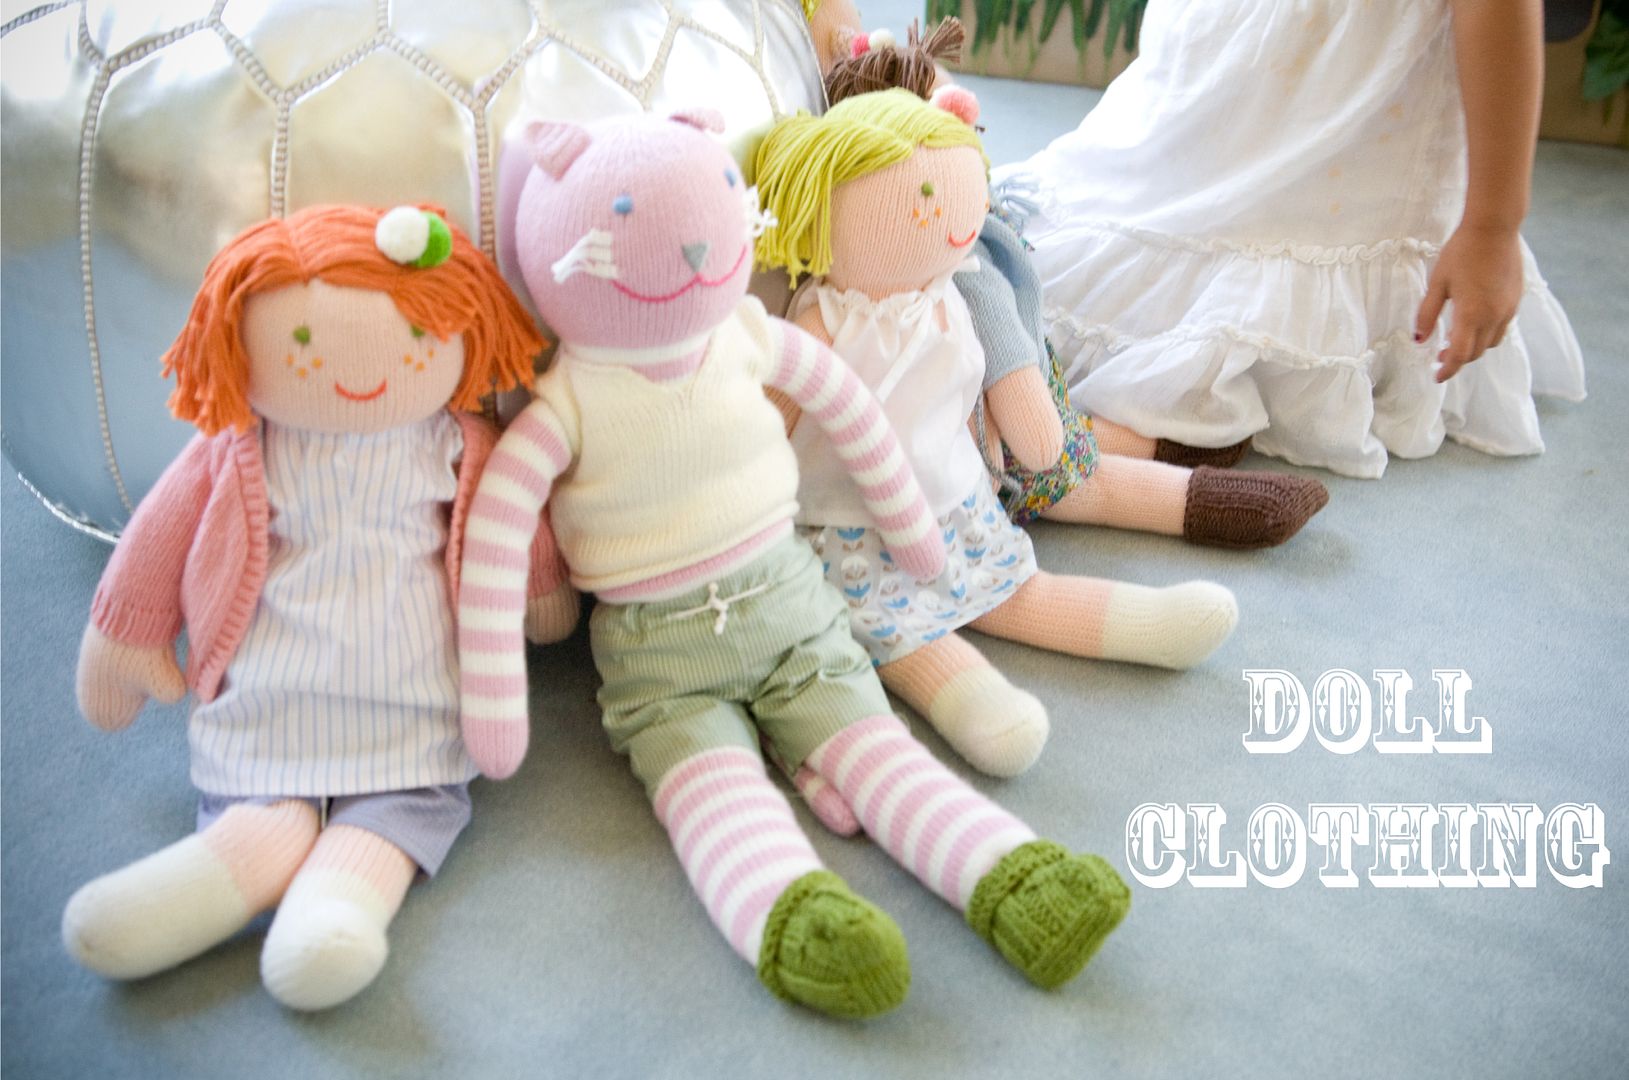 Cloth baby dolls by Blabla Kids 